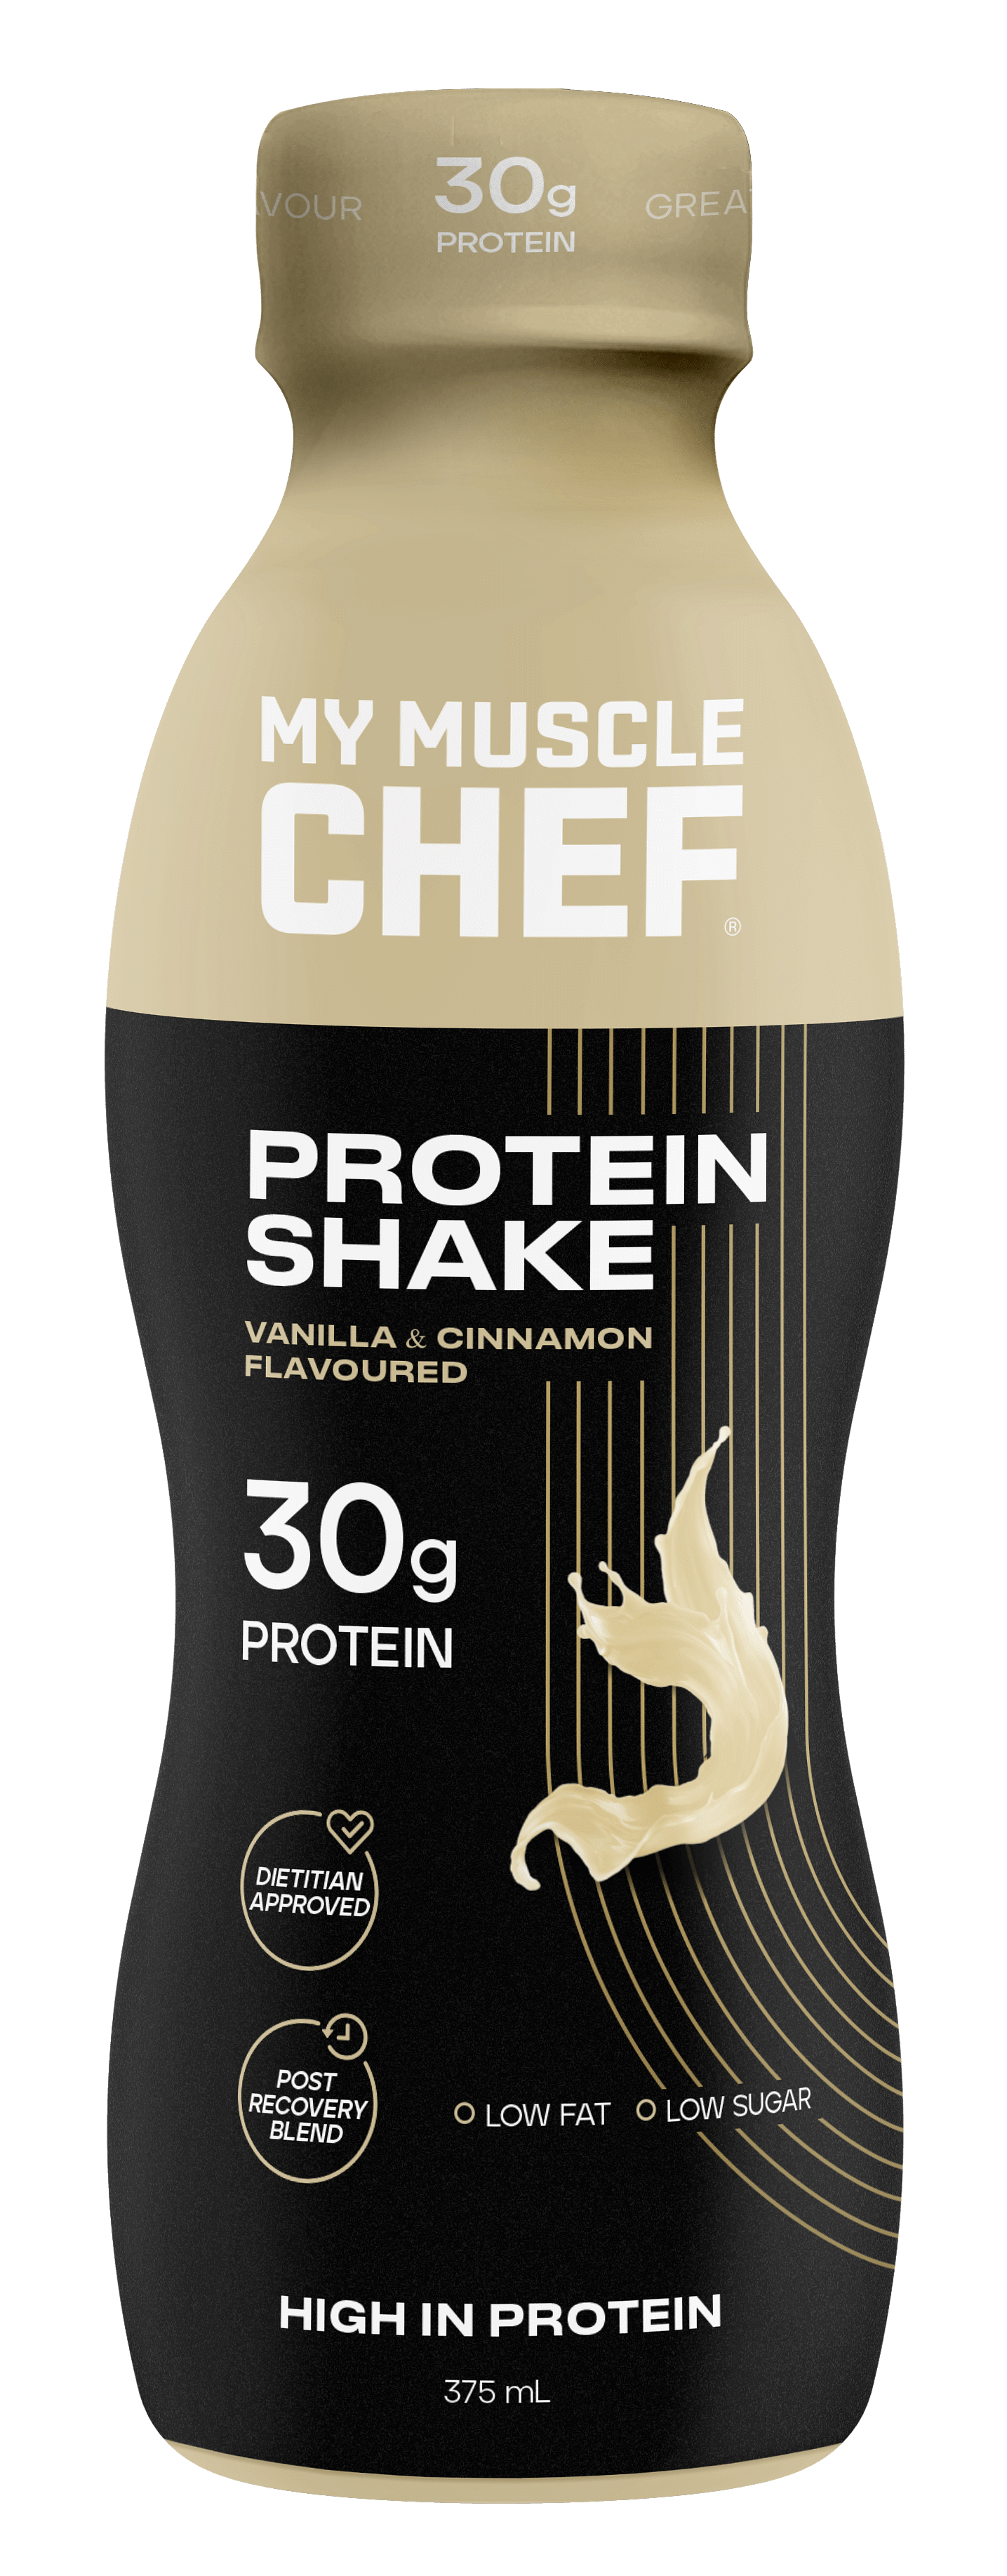 Protein Shake - Vanilla & Cinnamon Flavoured